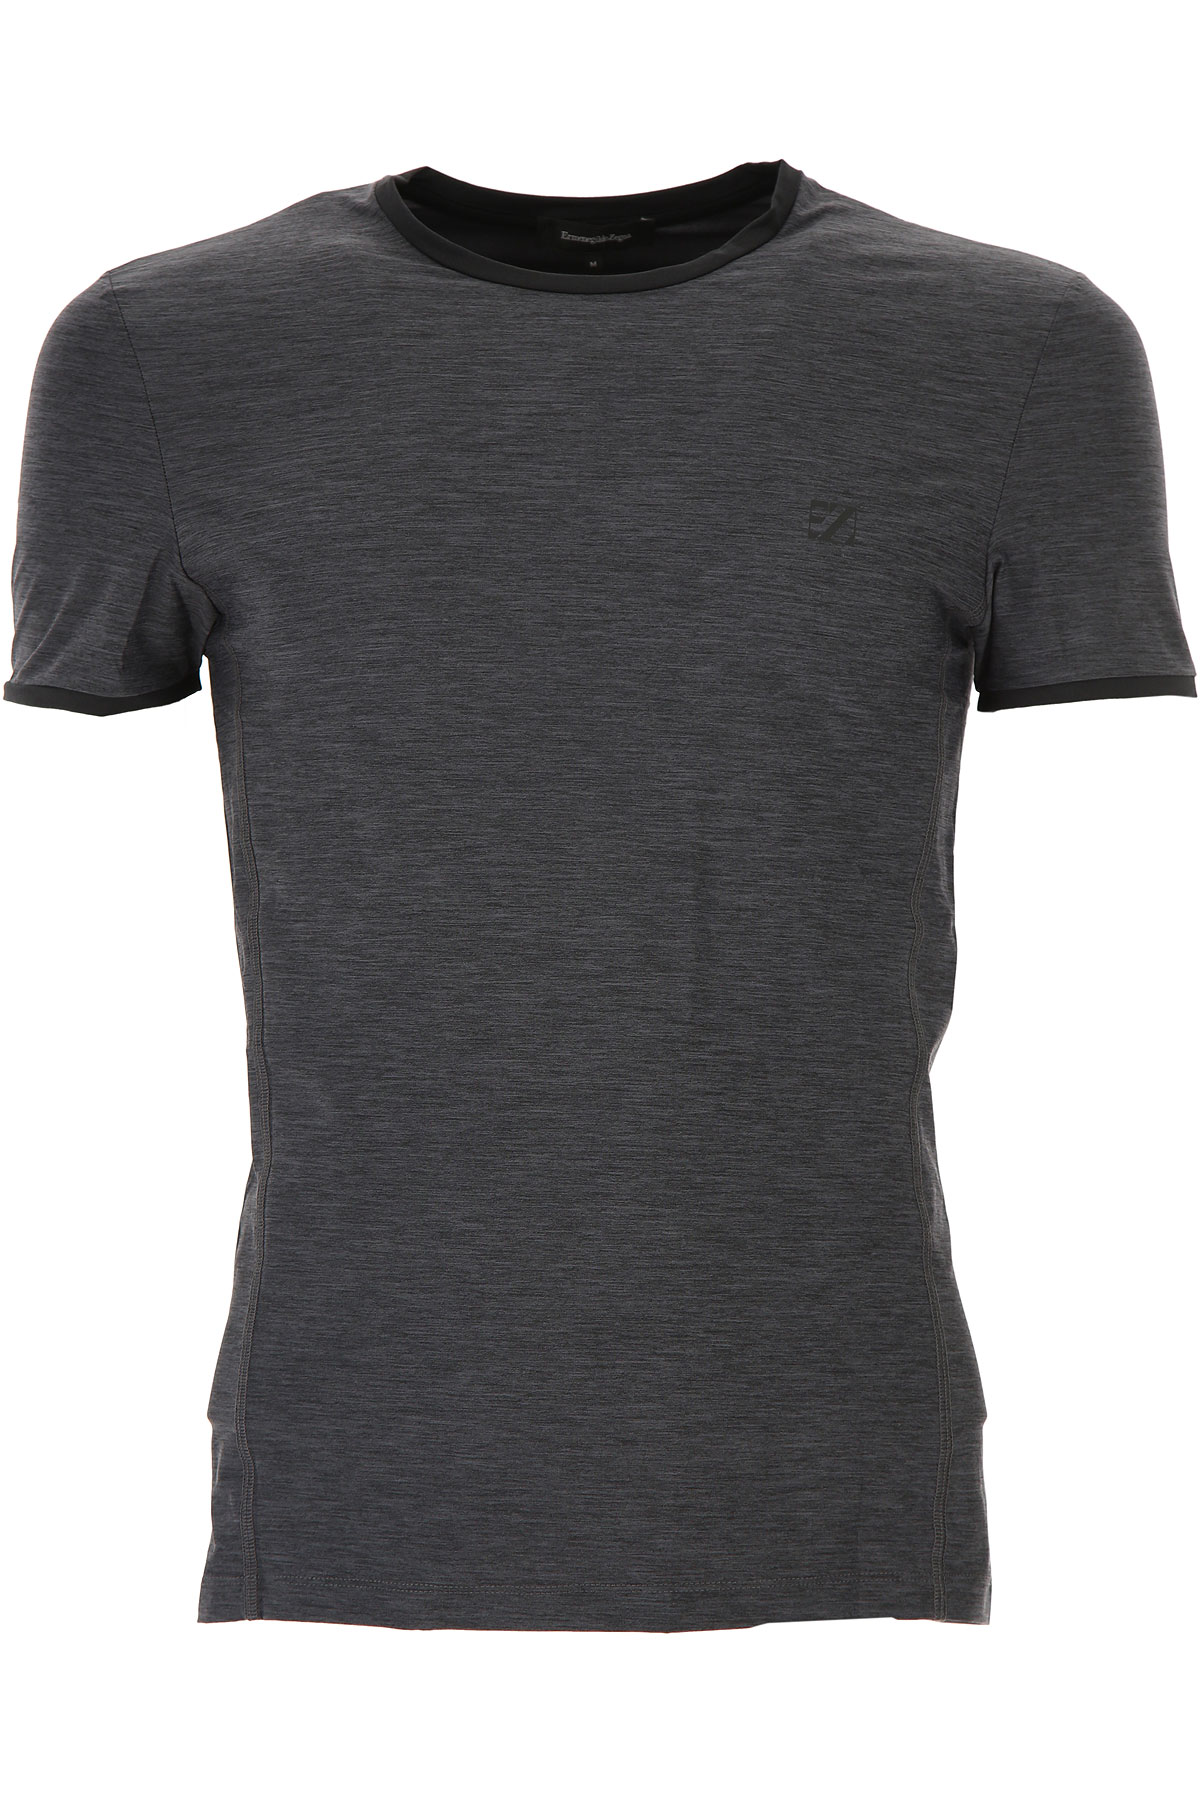 Ermenegildo Zegna T-shirt Homme , Gris foncé, Polyamide, 2017, S XL